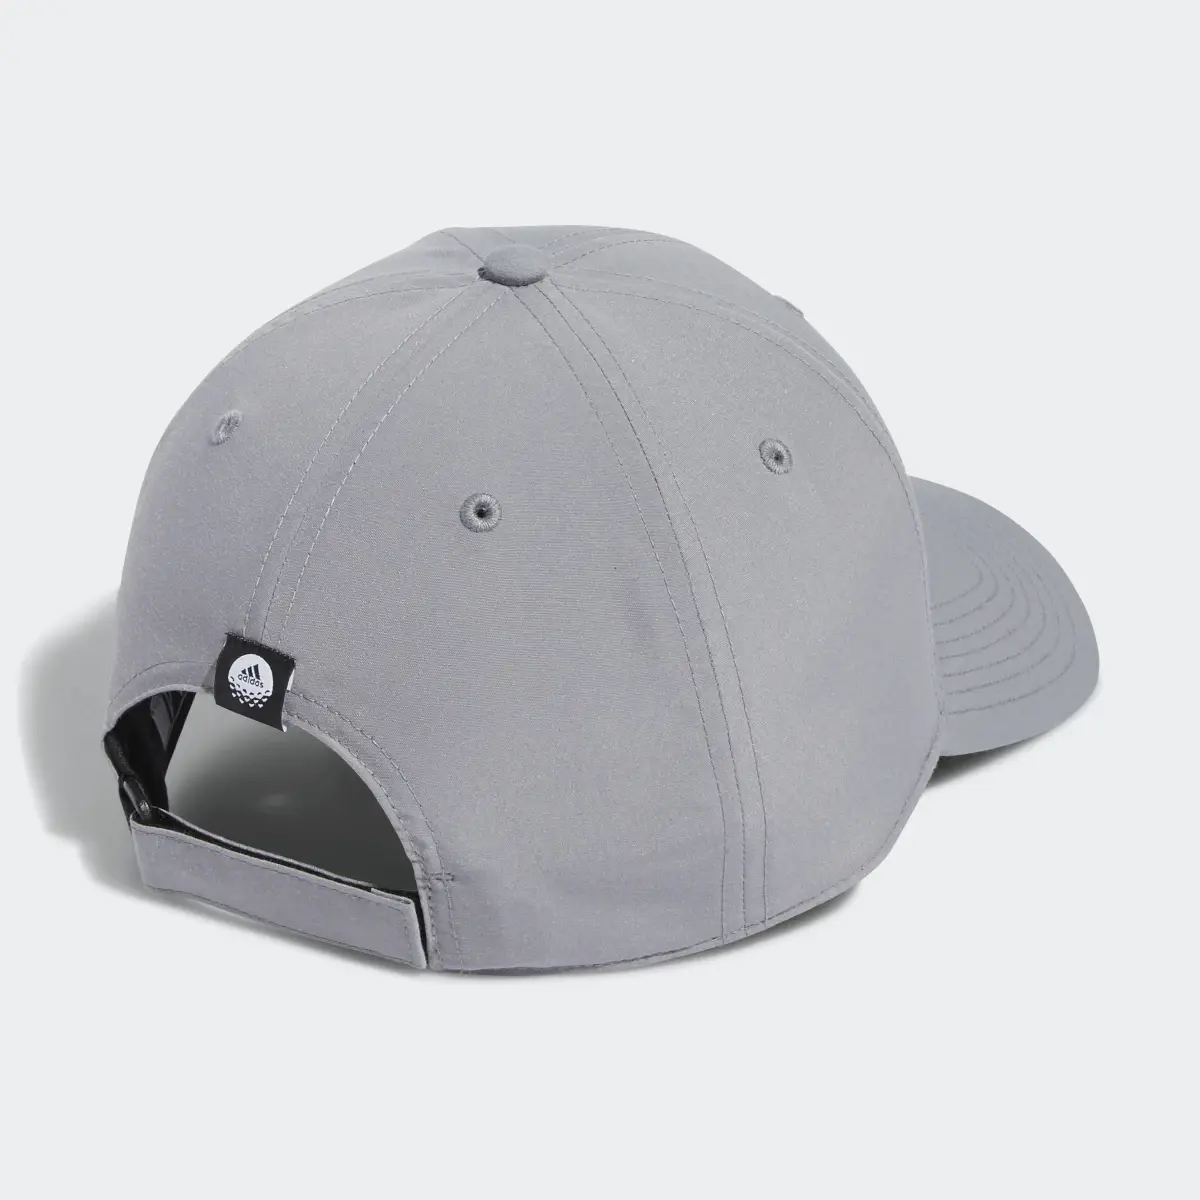 Adidas Golf Performance Hat. 3